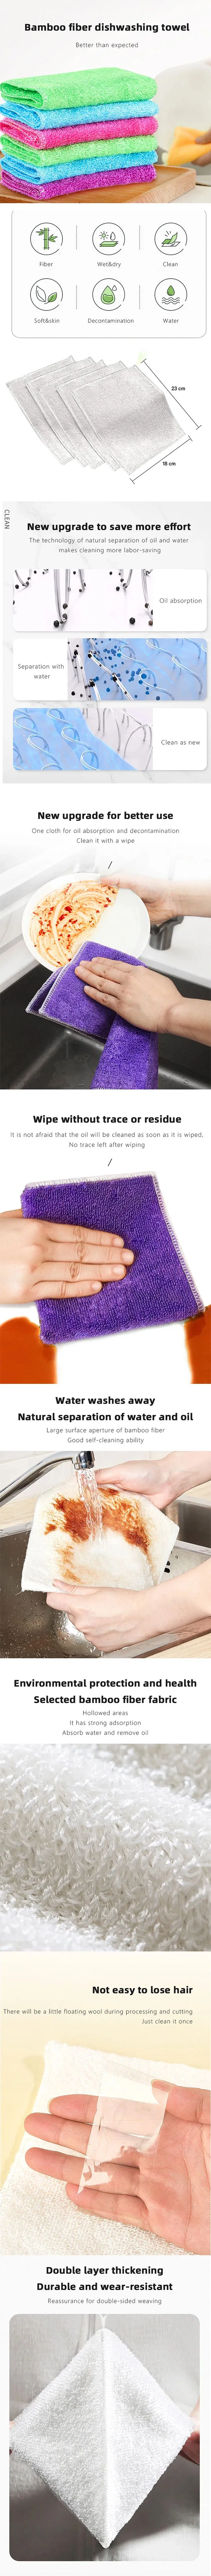 Hot Selling Eco-Friendly Super Soft Cleaner Cloth Bamboo Fiber Towel